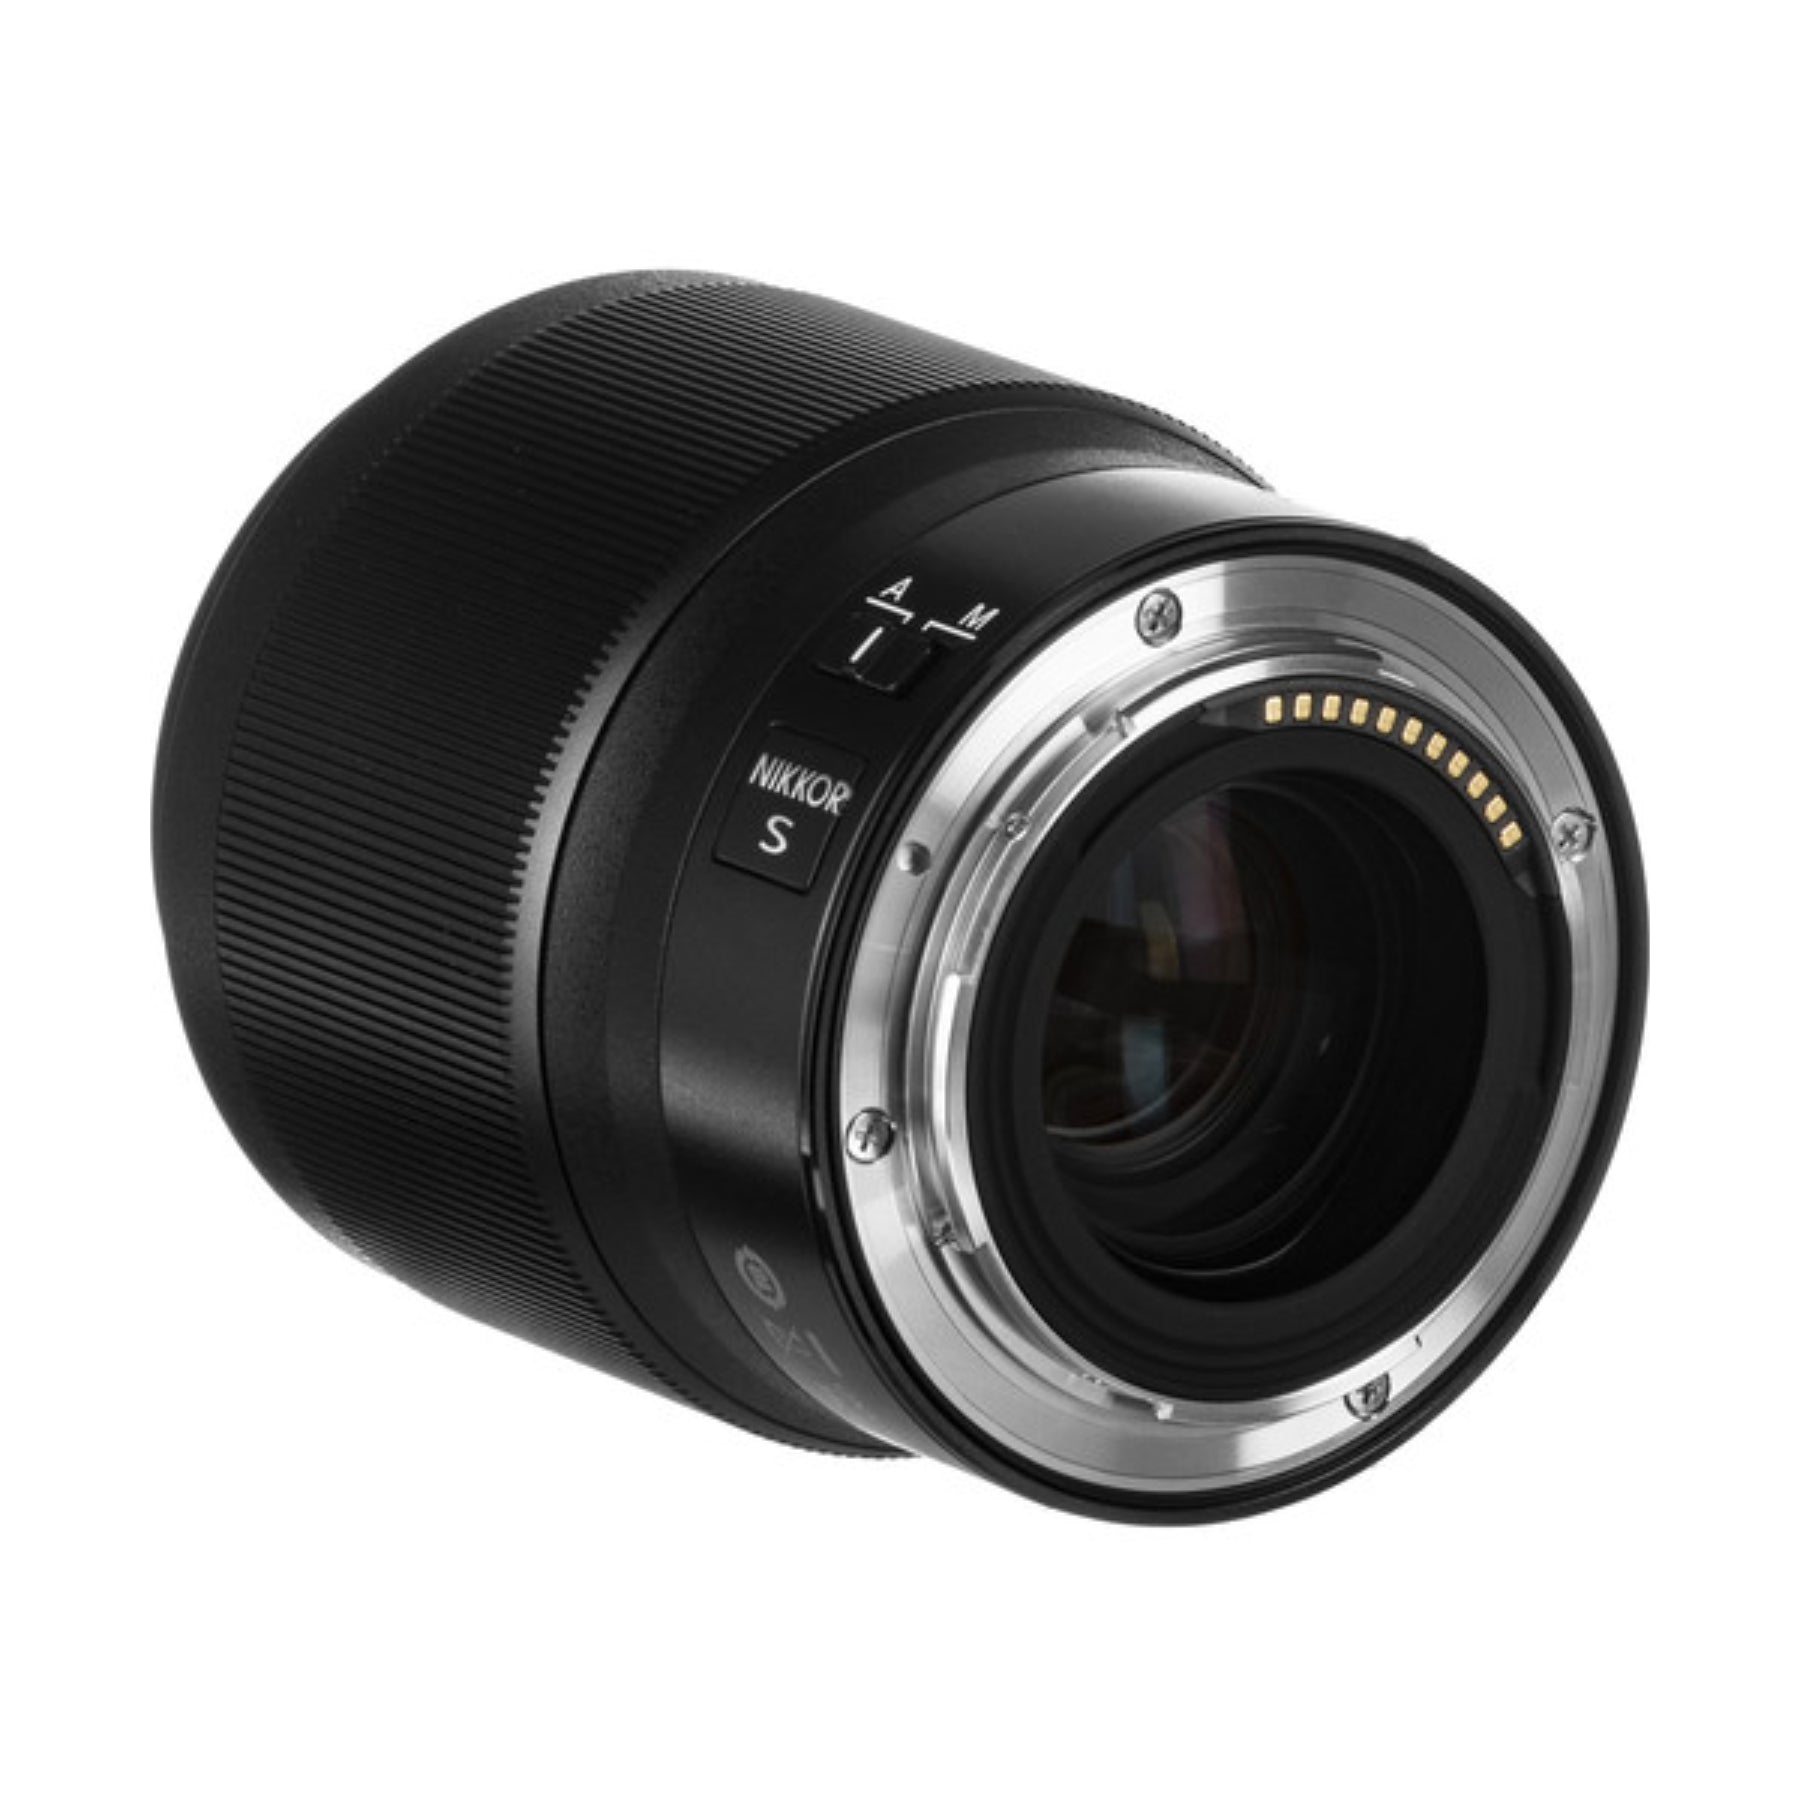 Buy Nikon NIKKOR Z 50mm f/1.8 S Lens at Topic Store